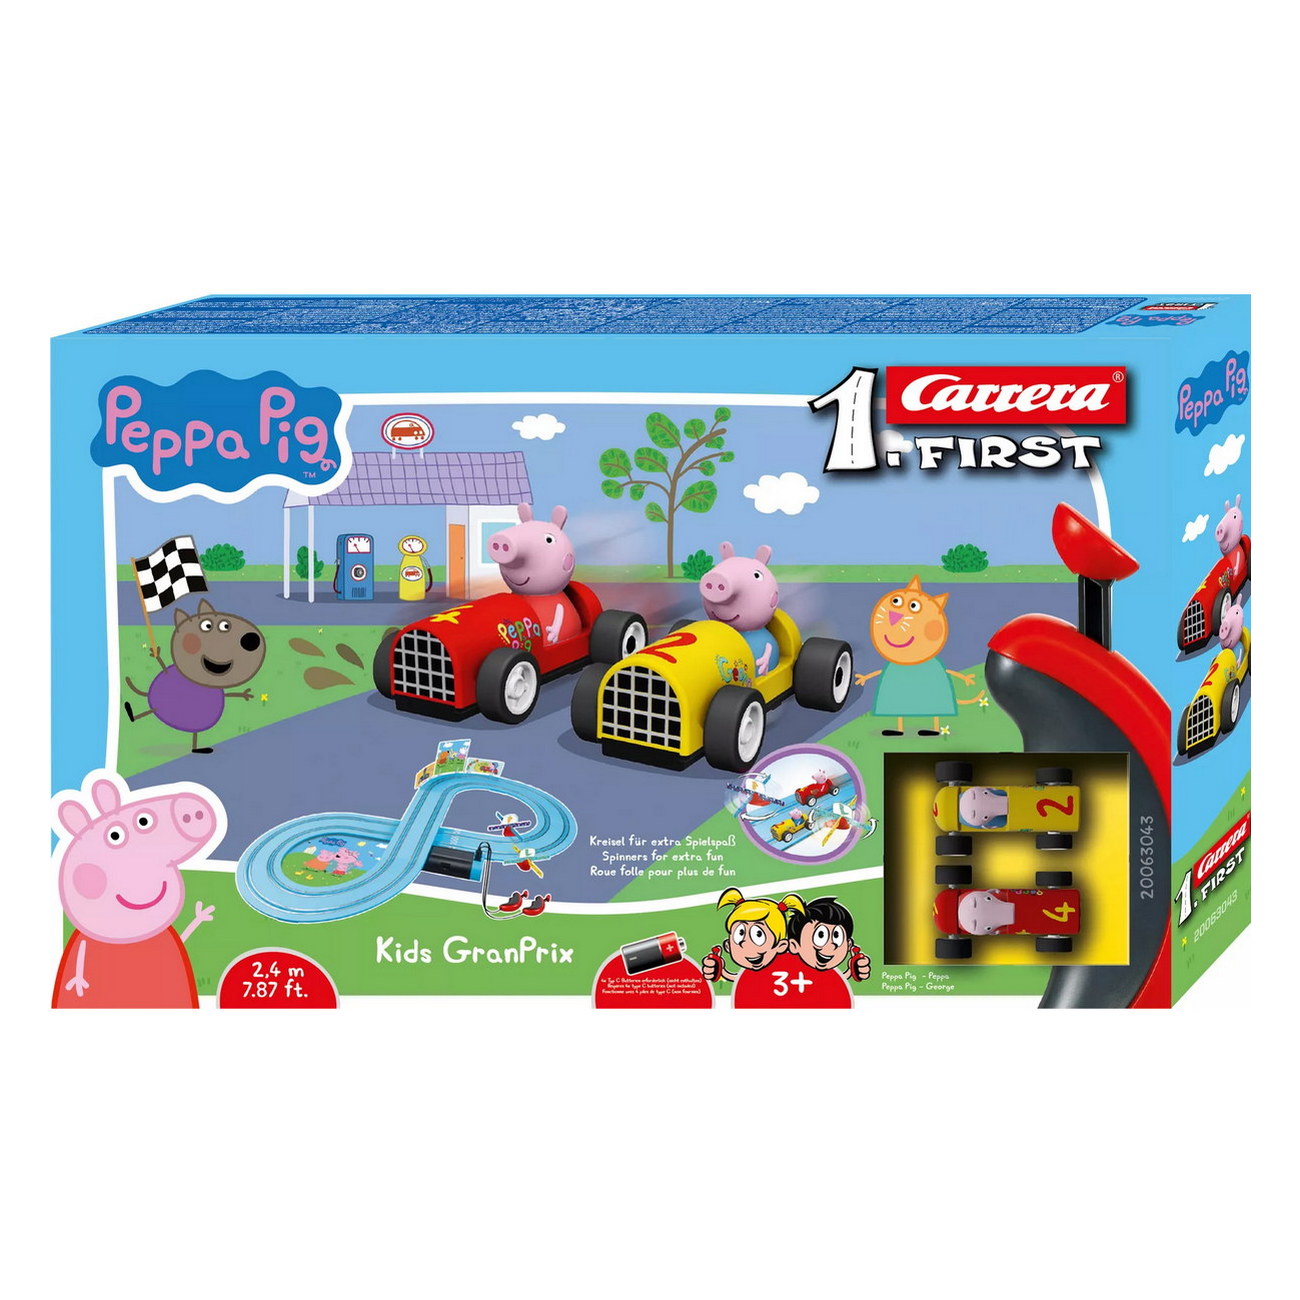 Peppa Pig - Kids GranPrix (20063043)